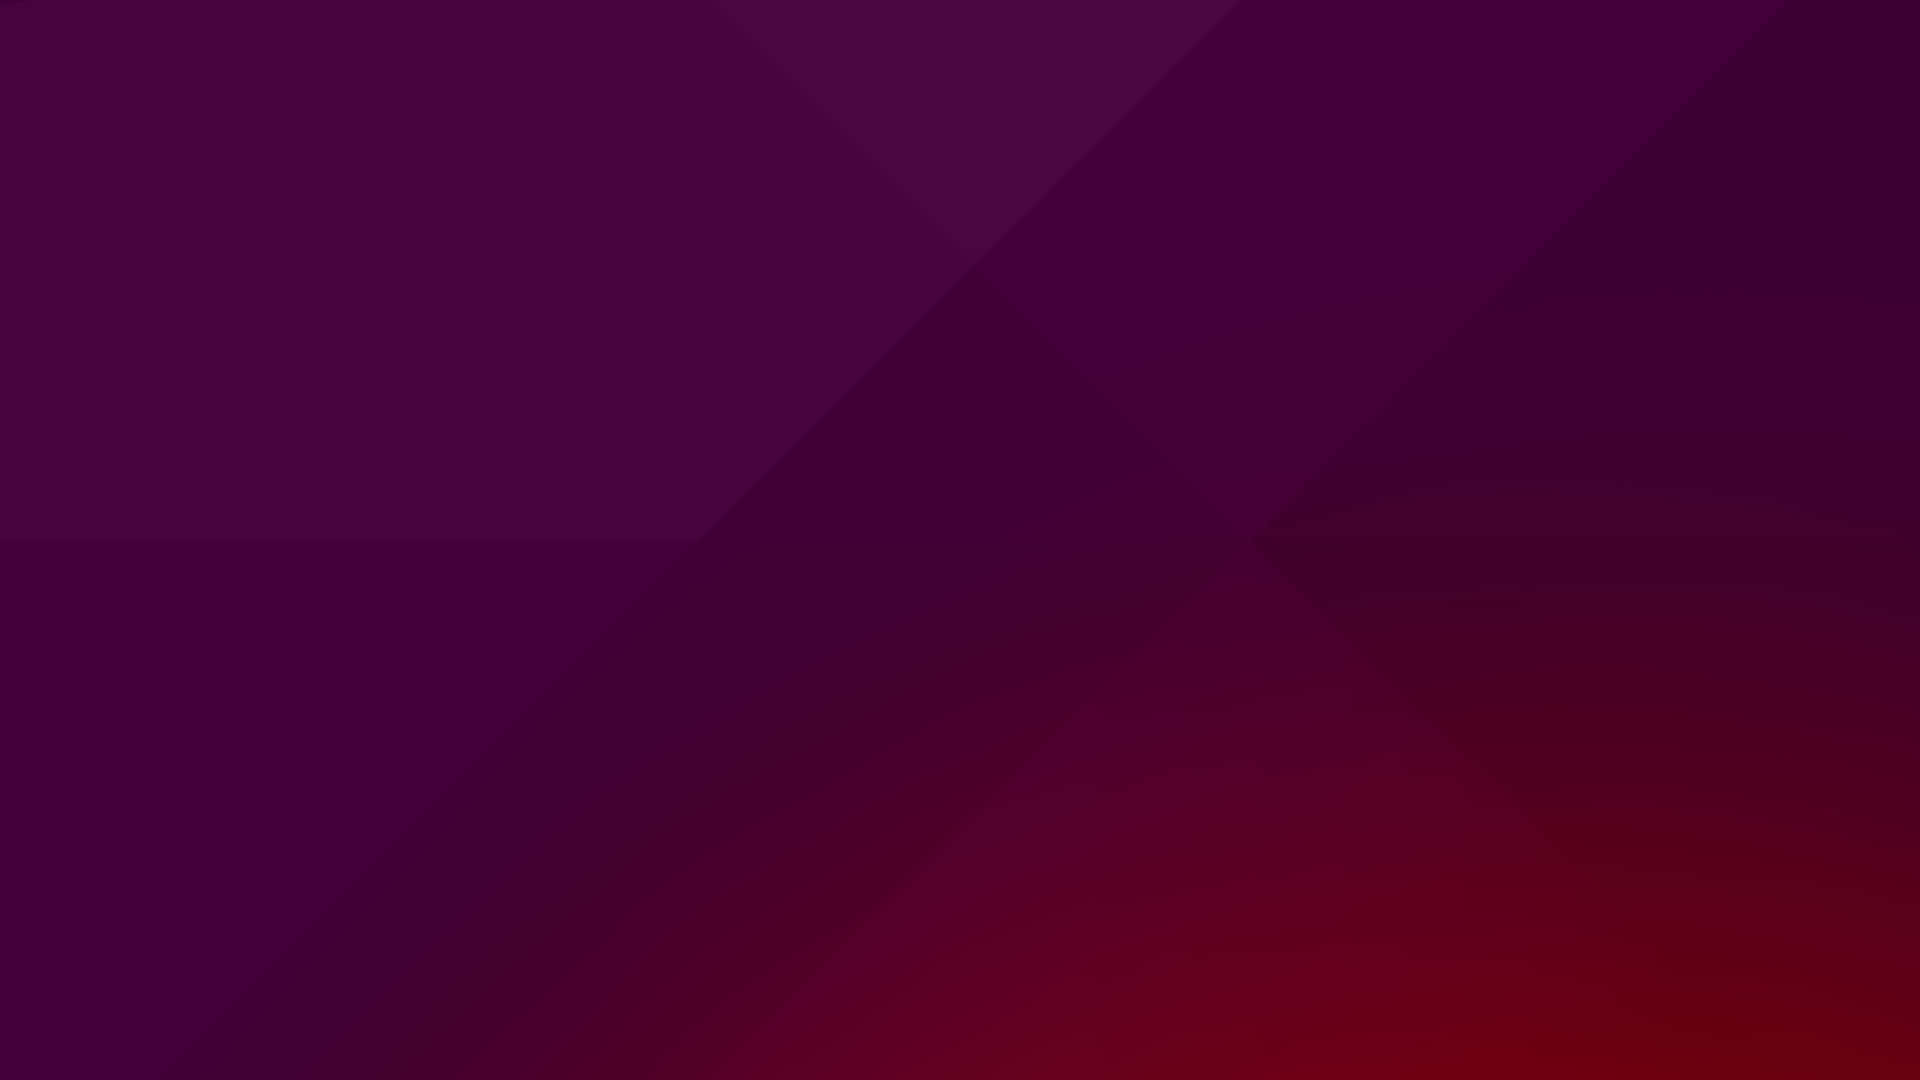 Enjoy the vivid colors of Ubuntu 4K Wallpaper